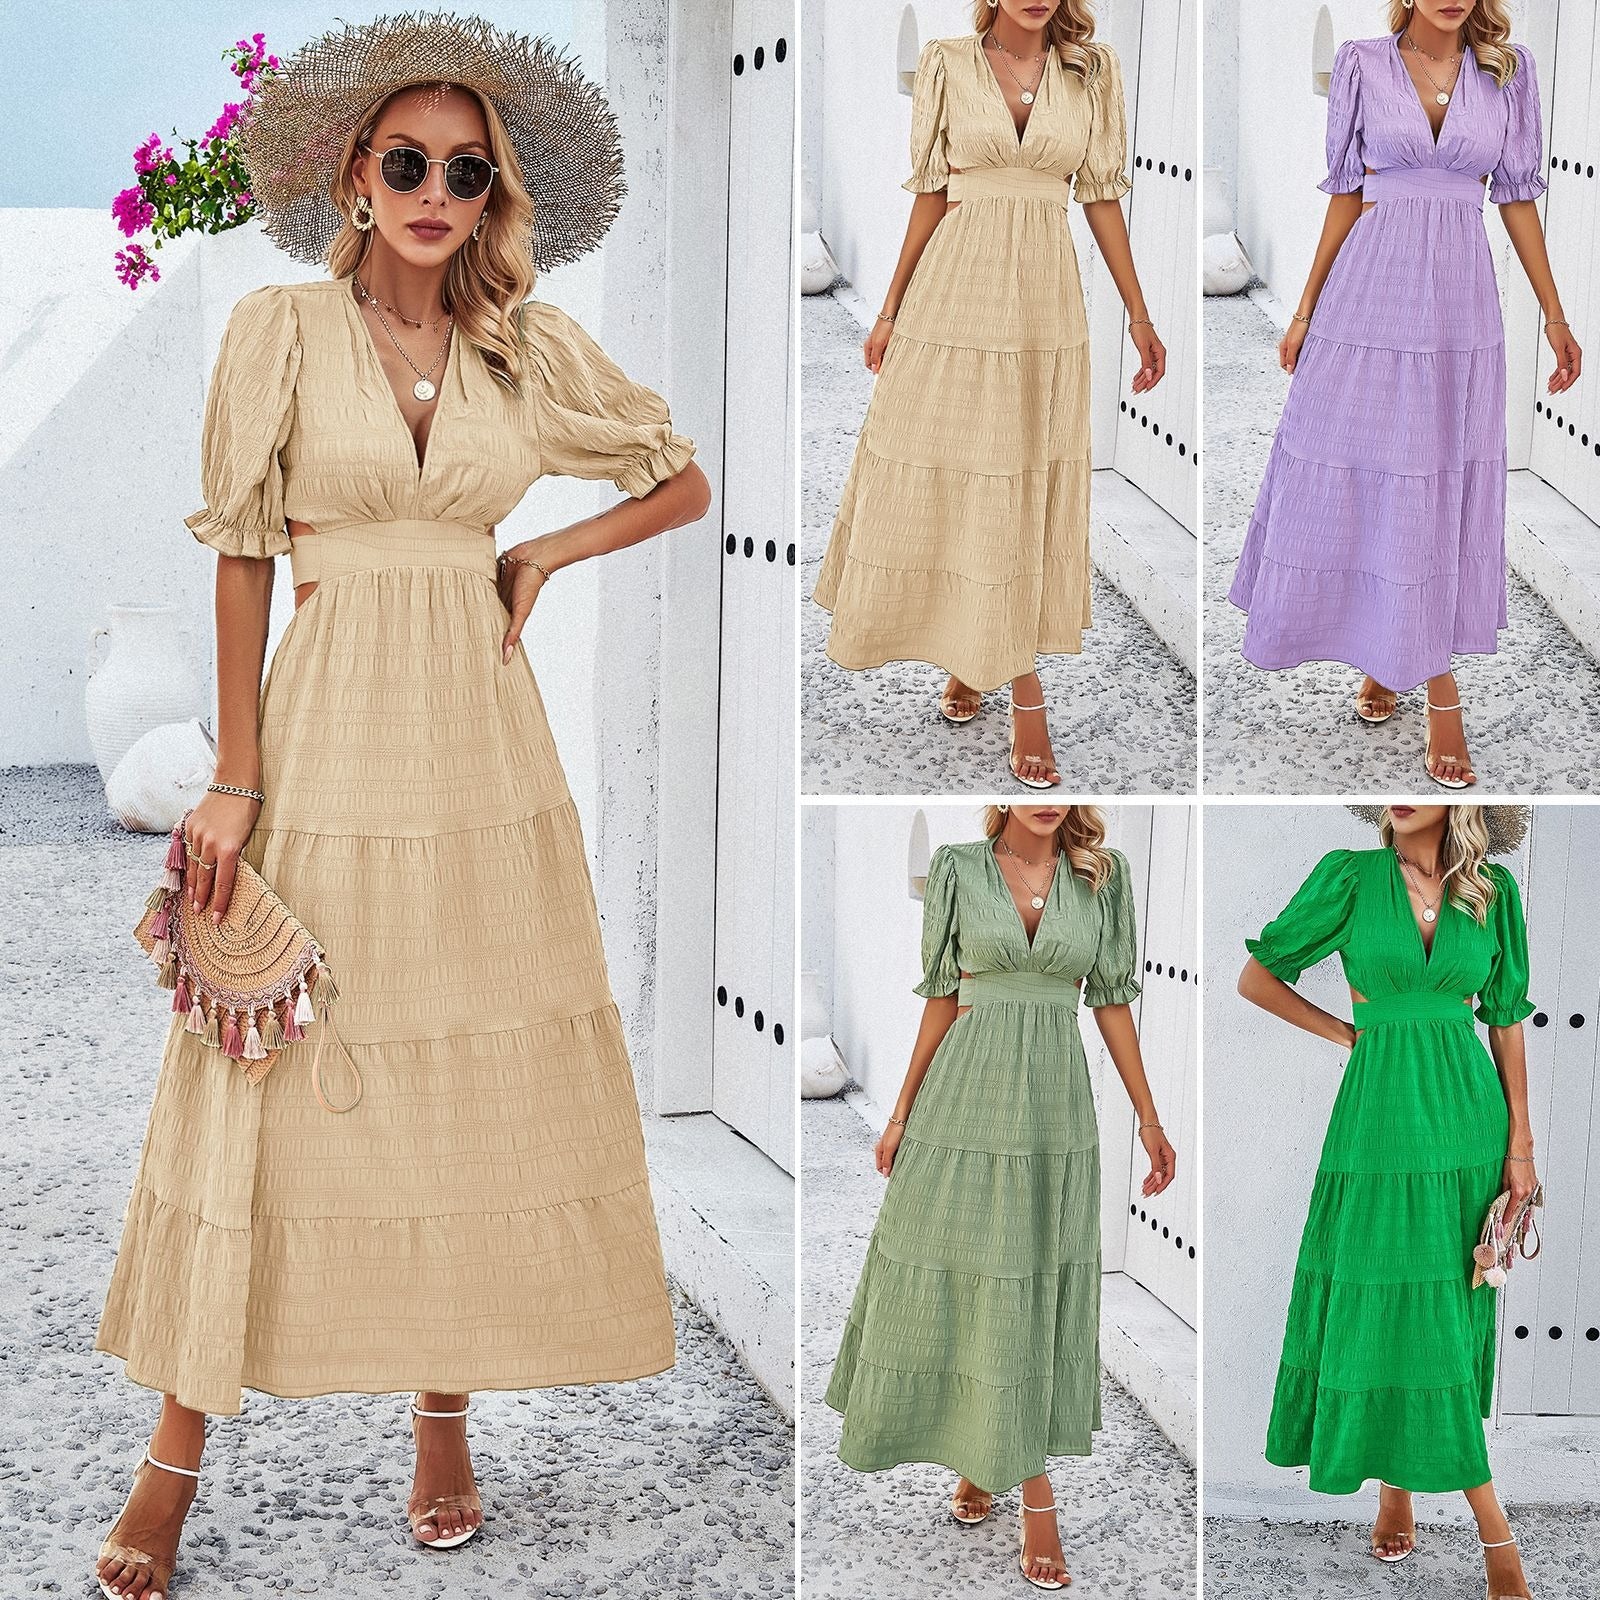 Lovemi -  Women's spring summer temperament solid color V-neck waist dress